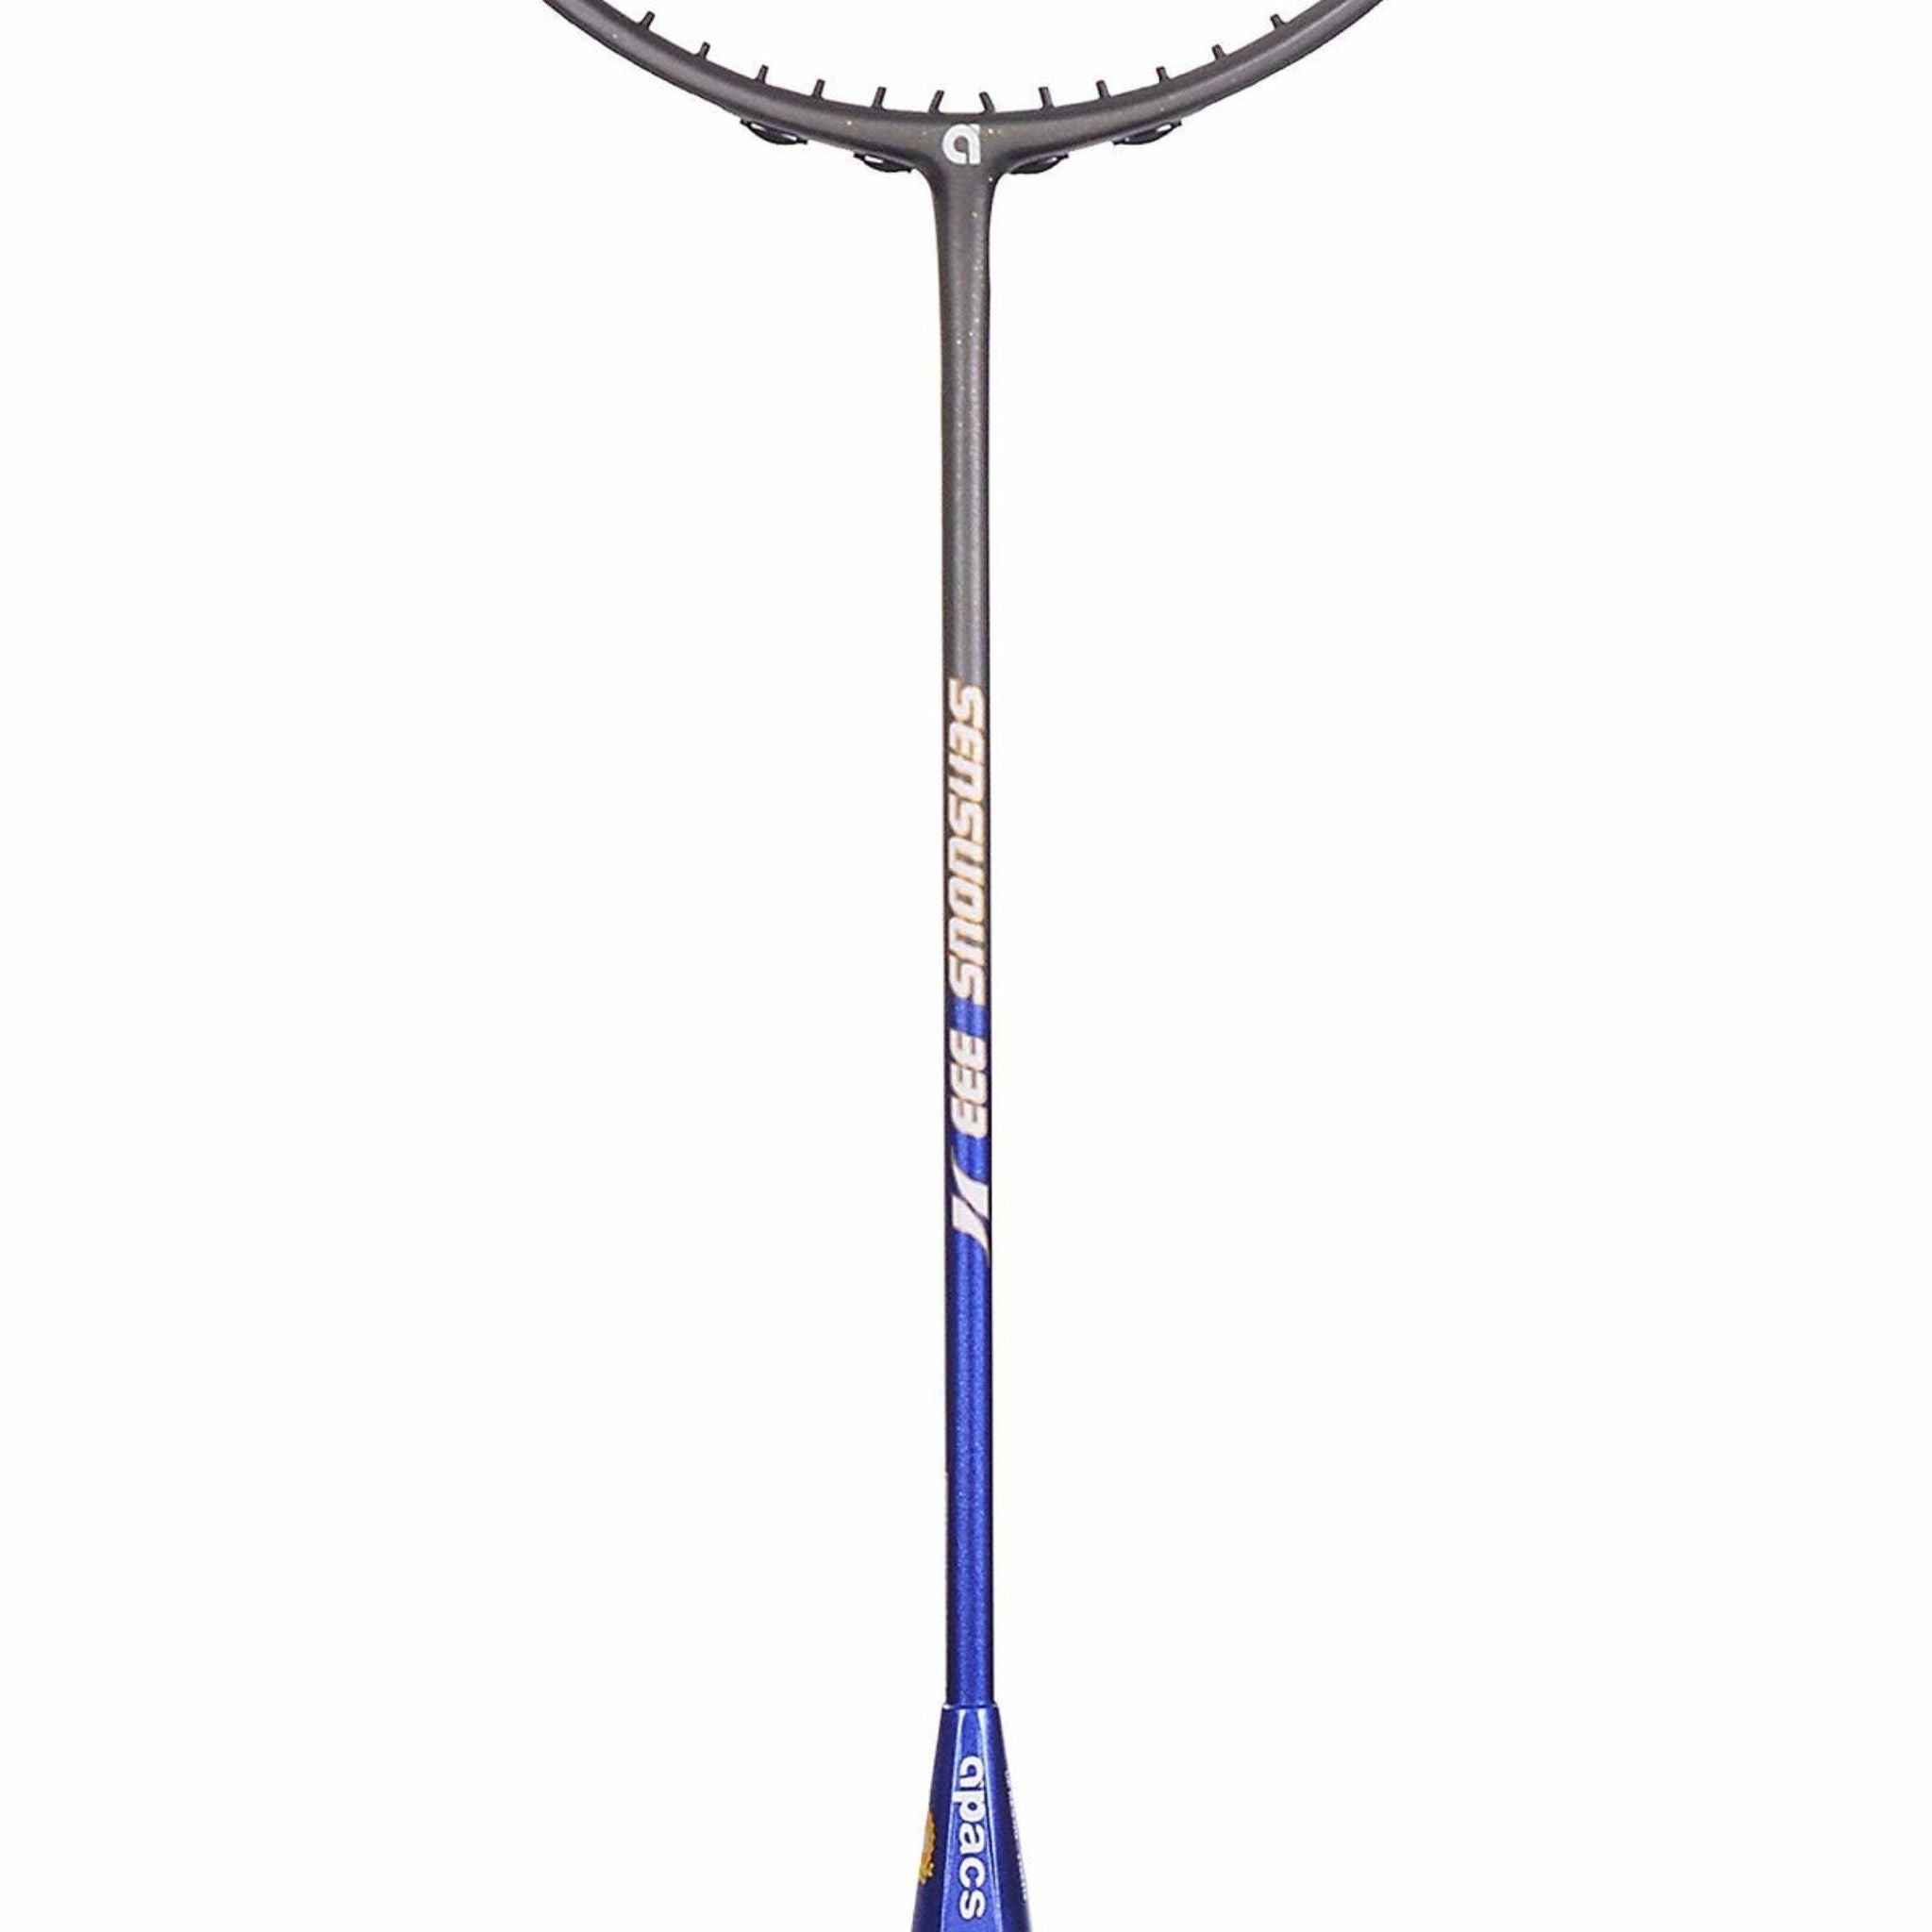 APACS Sensuous 333 Badminton Racket